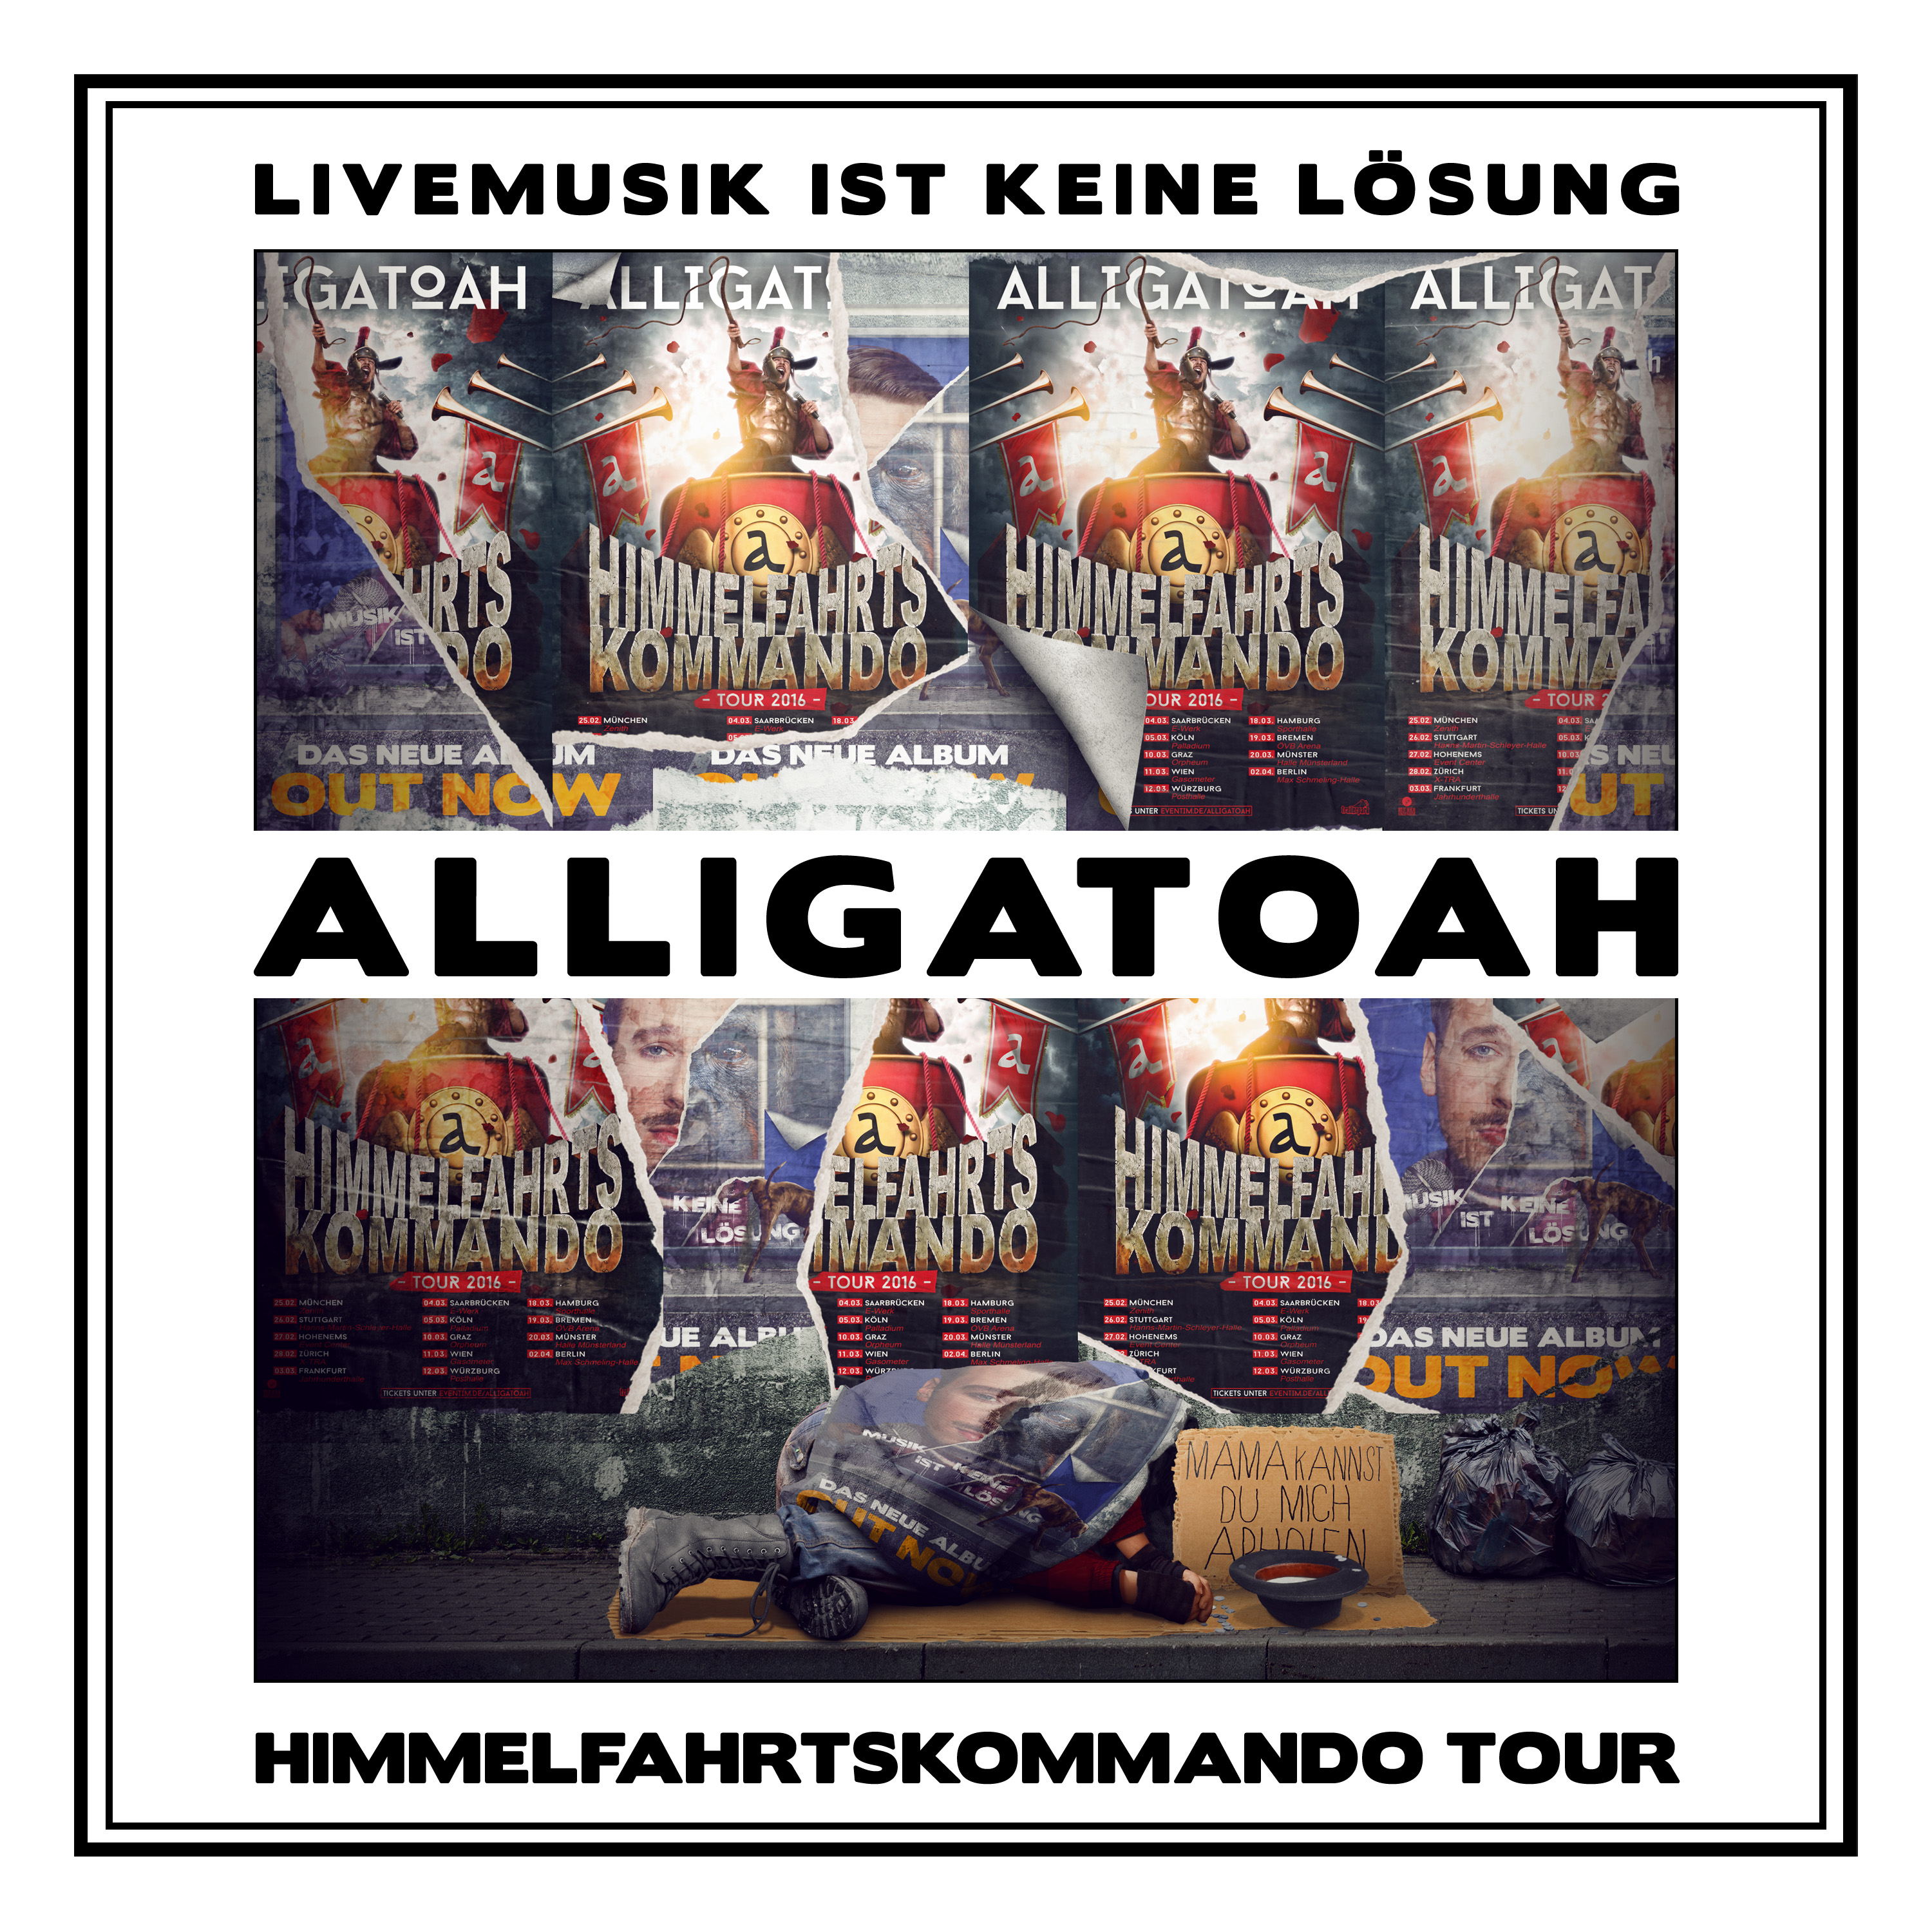 + Alligatoah Tour - Ist Himmelfahrtskommando Alligatoah (CD Video) Keine Livemusik - Lösung (Ltd. - (3CD+DVD+T-Shirt) Fanbox) - DVD